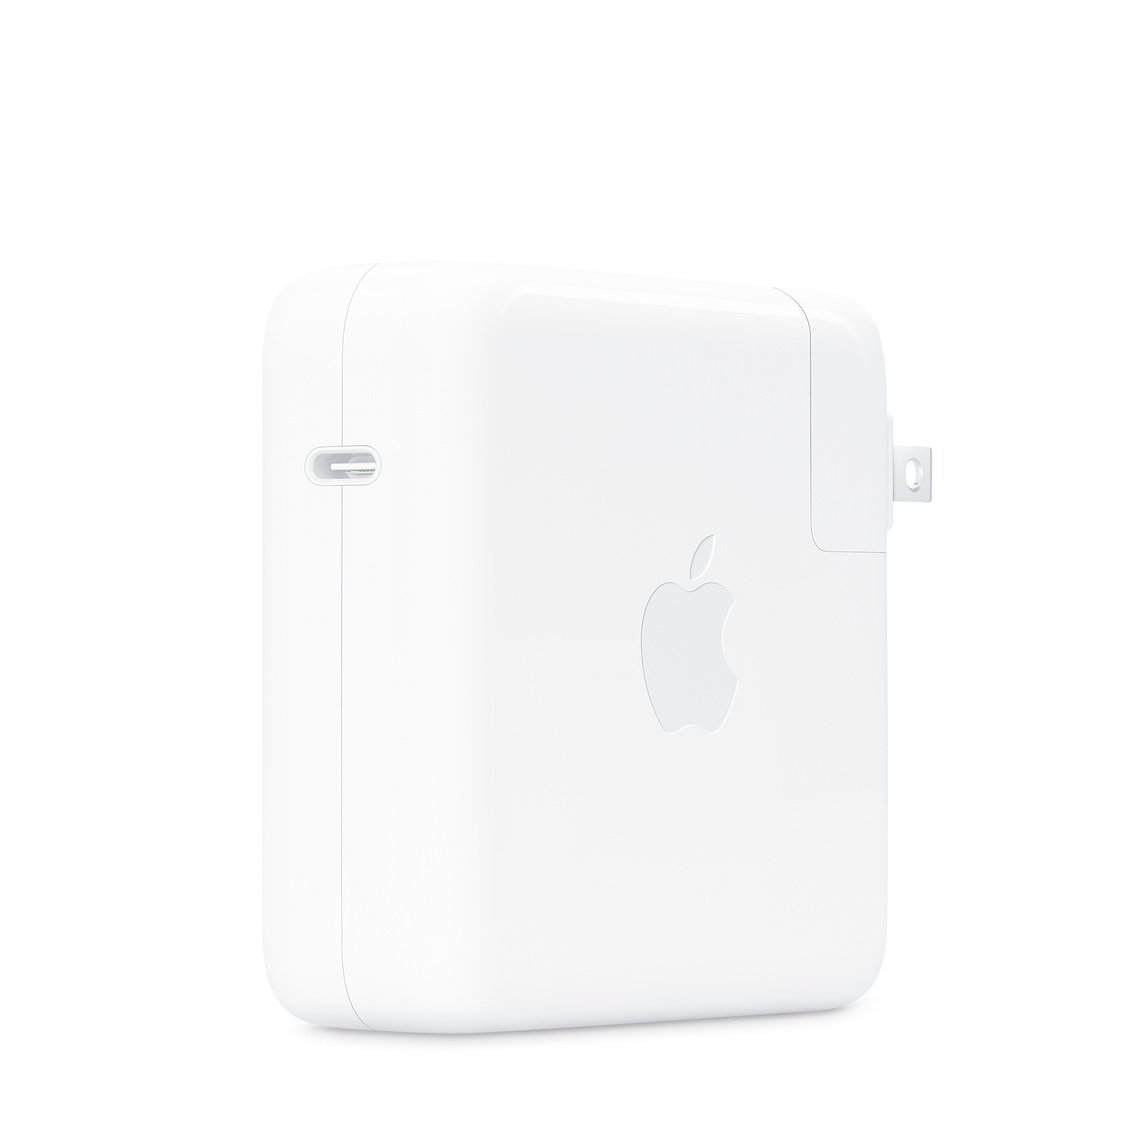 Apple 96W USB-C Power Adapter - Add-on™ Store